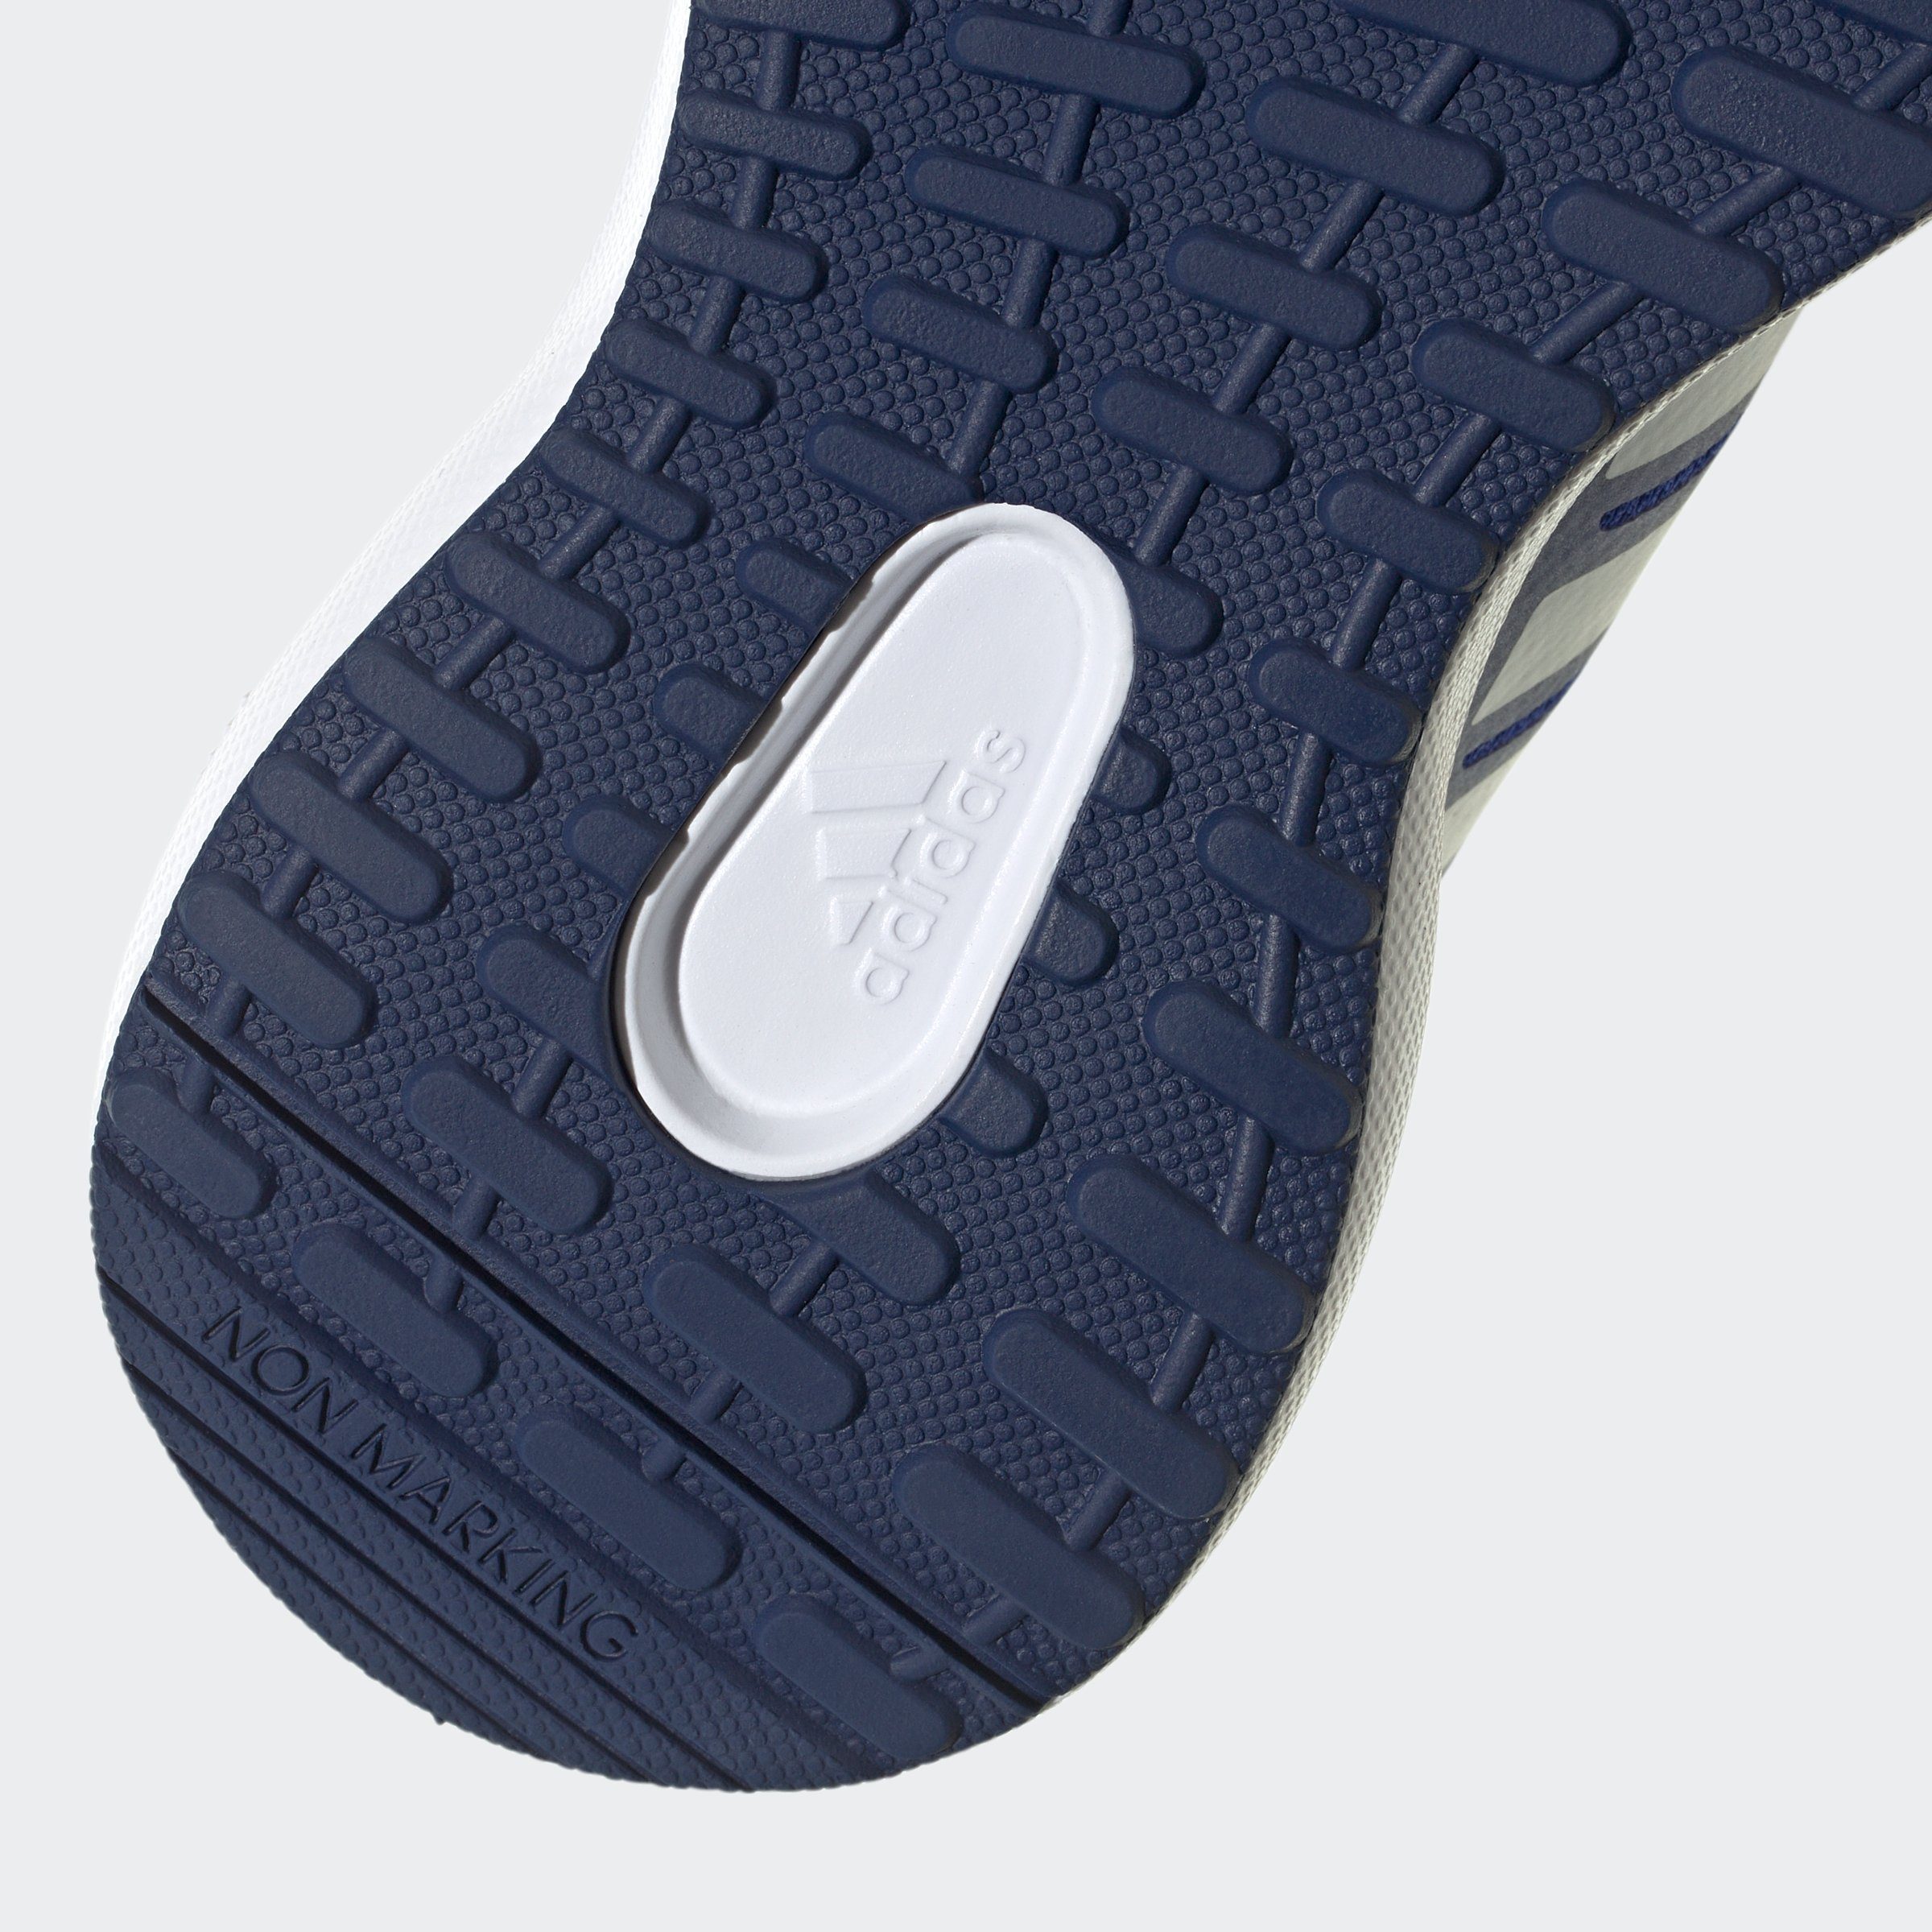 2.0 FORTARUN lucblu CLOUDFOAM Sneaker adidas LACE Sportswear